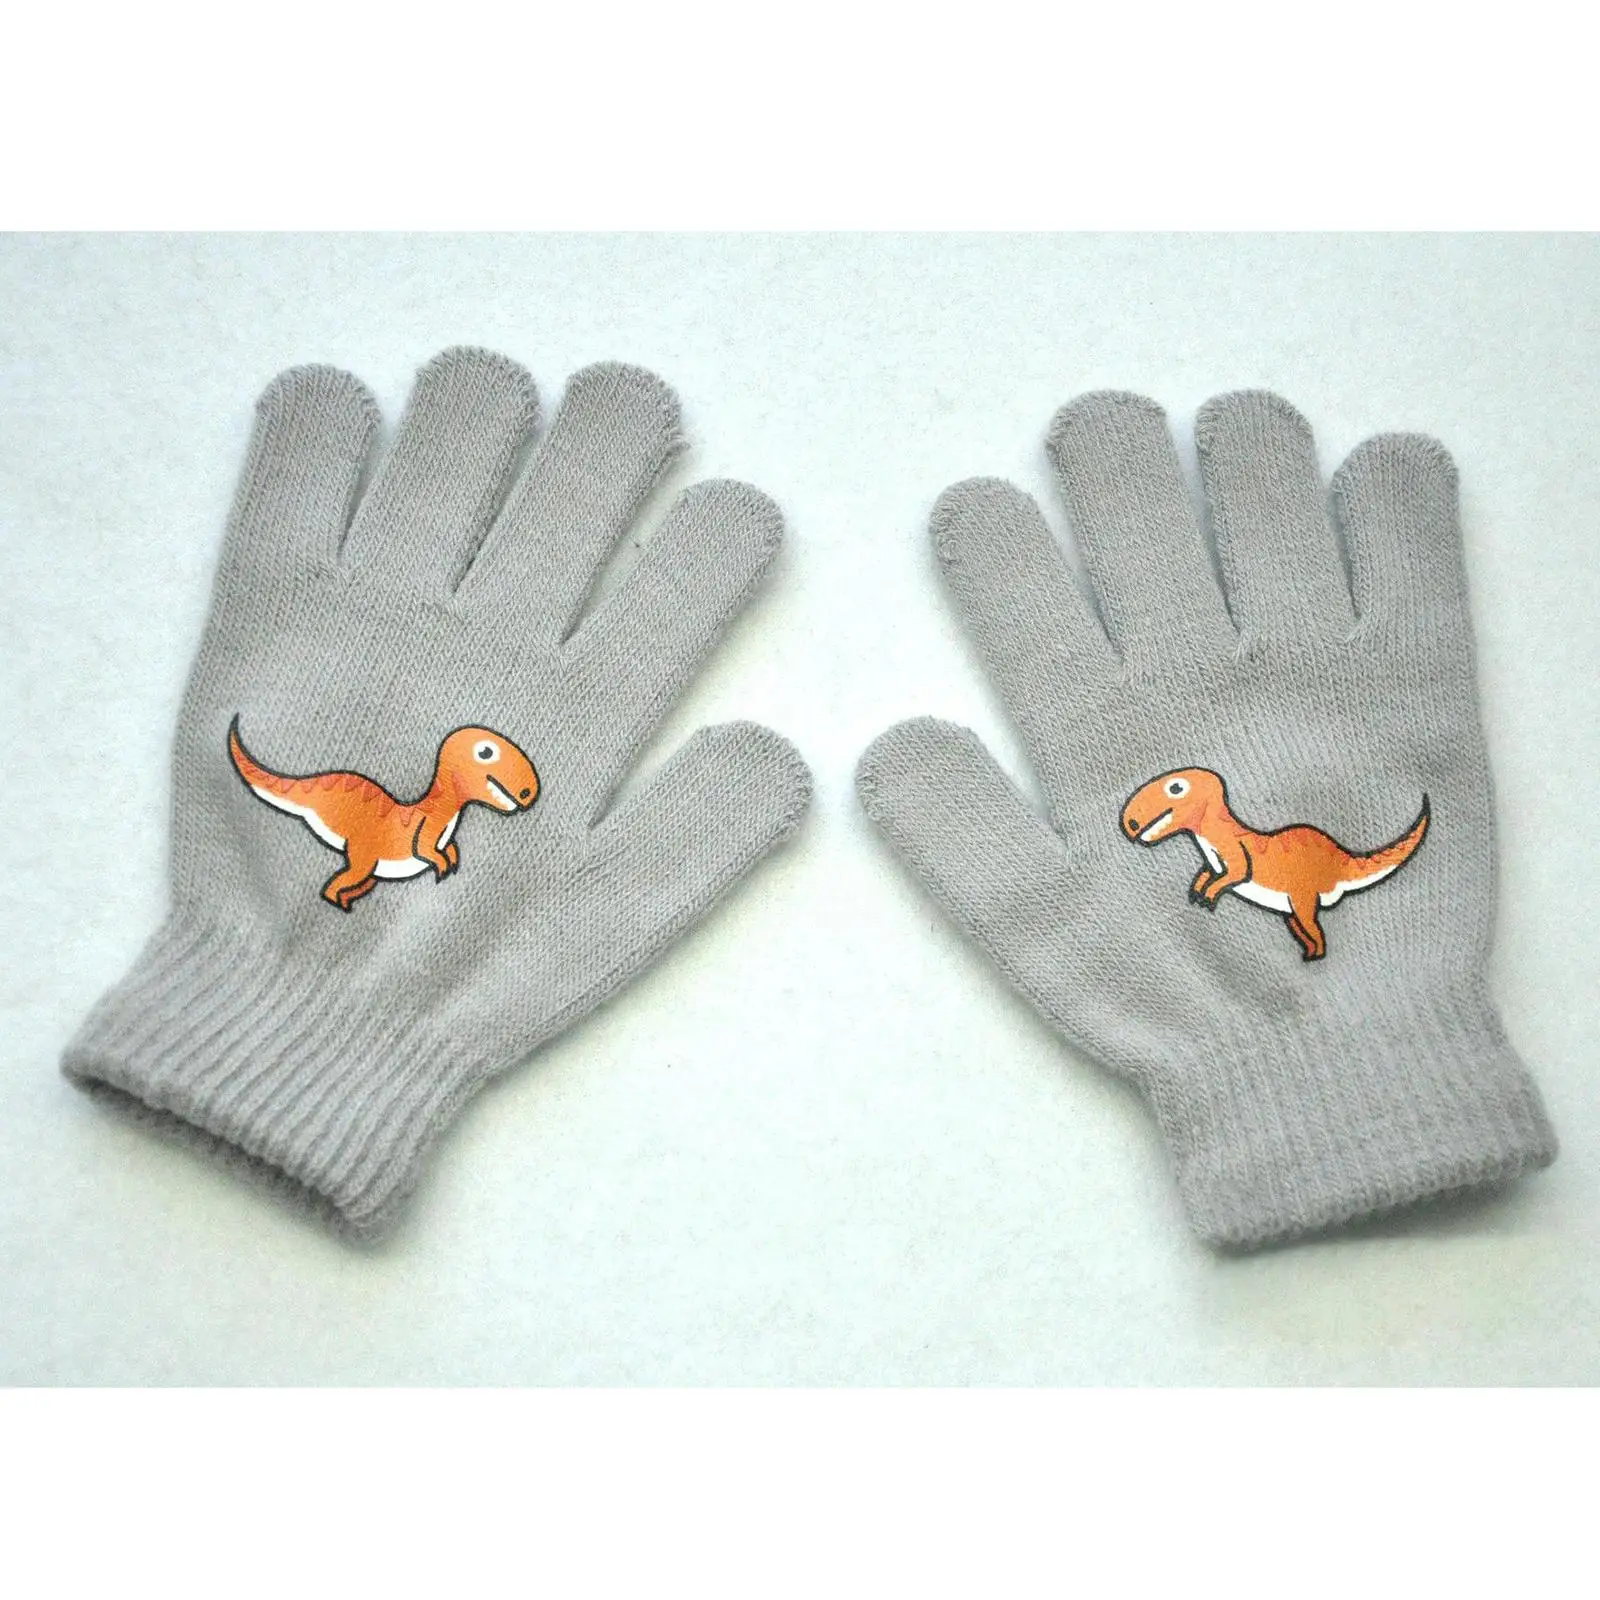 Unisex Kids Gloves Winter Warm Stretchy Full Fingers Mitten Knitted Dinosaur Series Washable for Boys and Girls Toddler Children